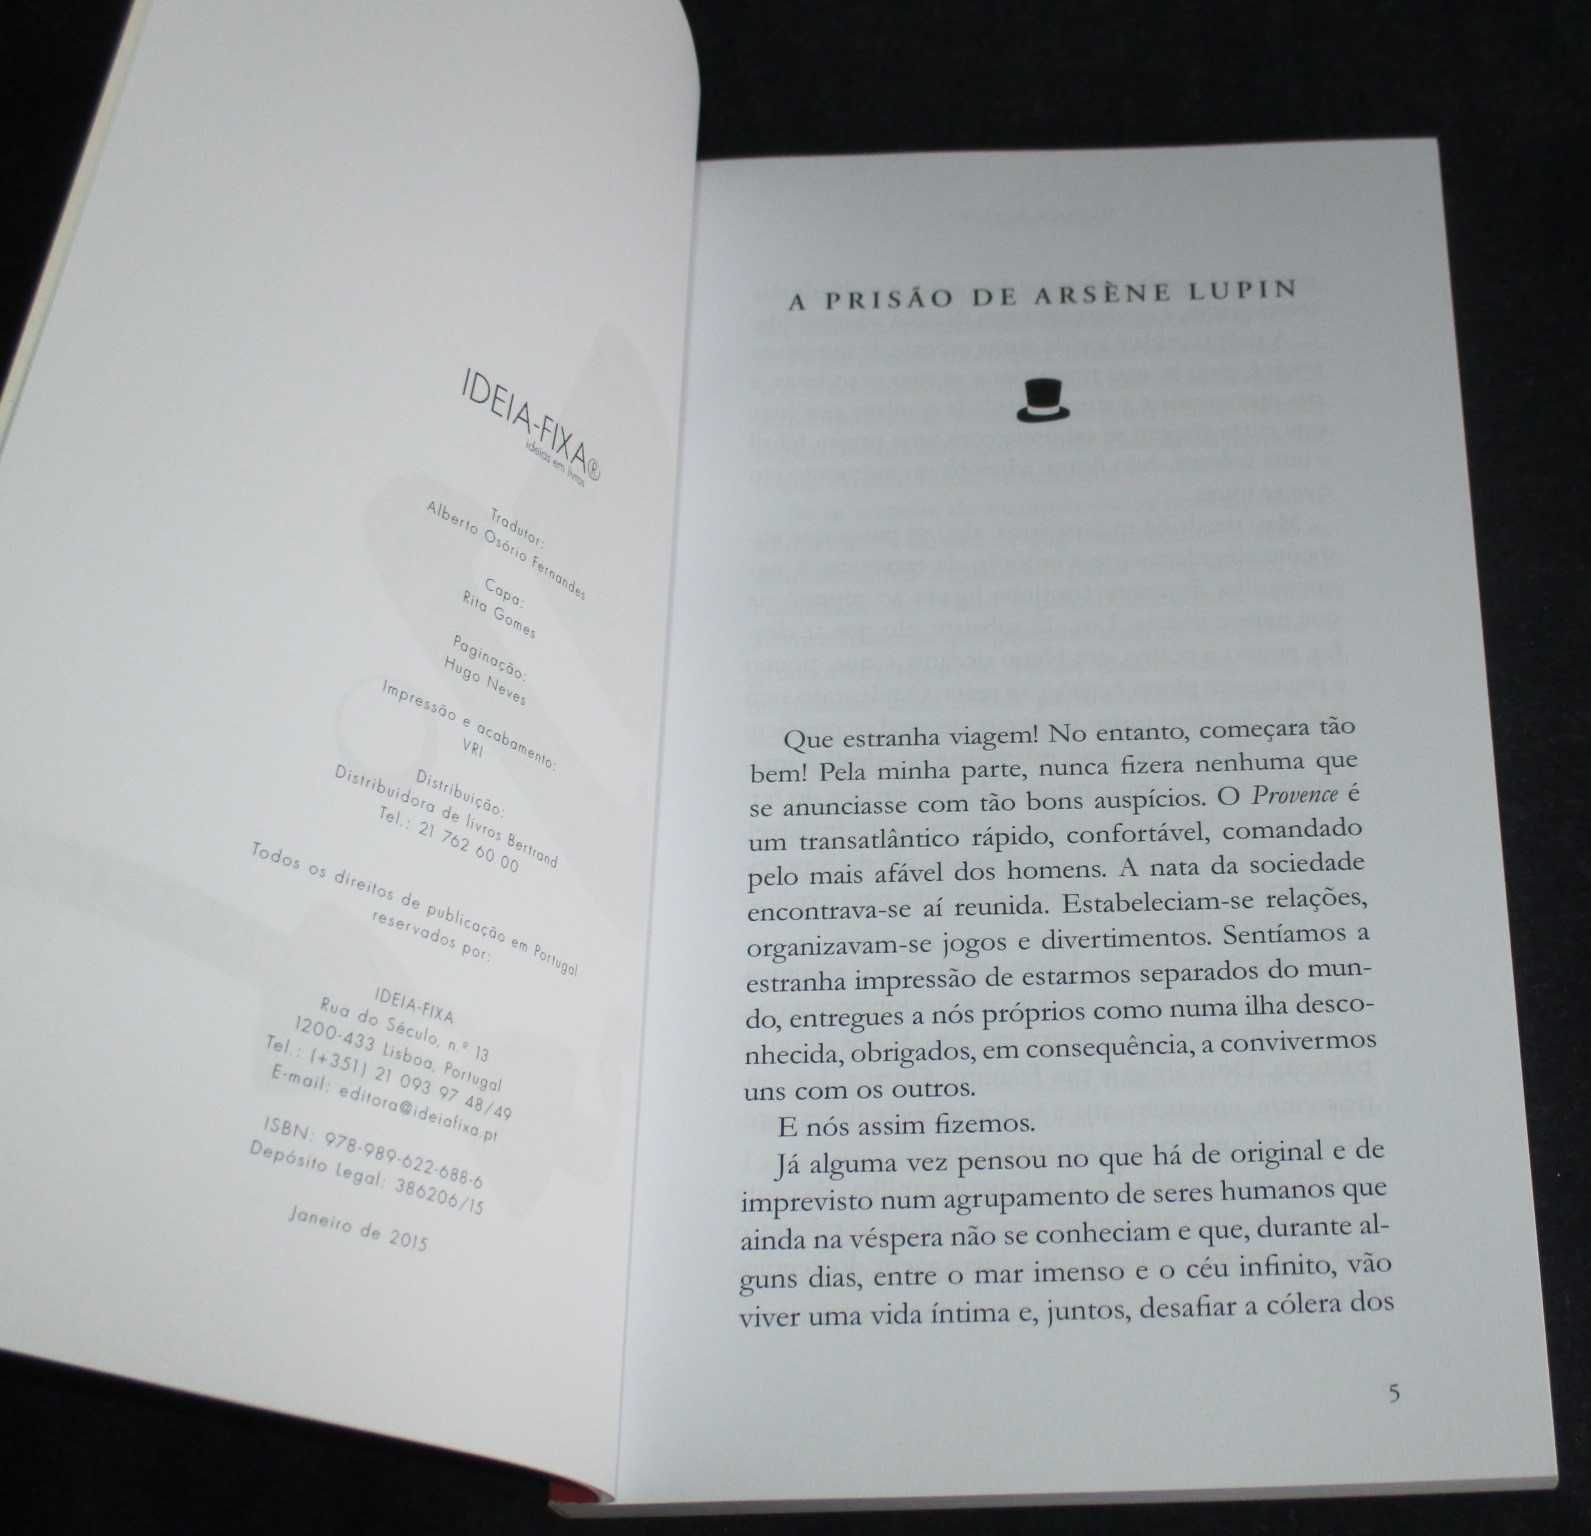 Livro Arsène Lupin Gentleman-Gatuno Maurice Leblanc